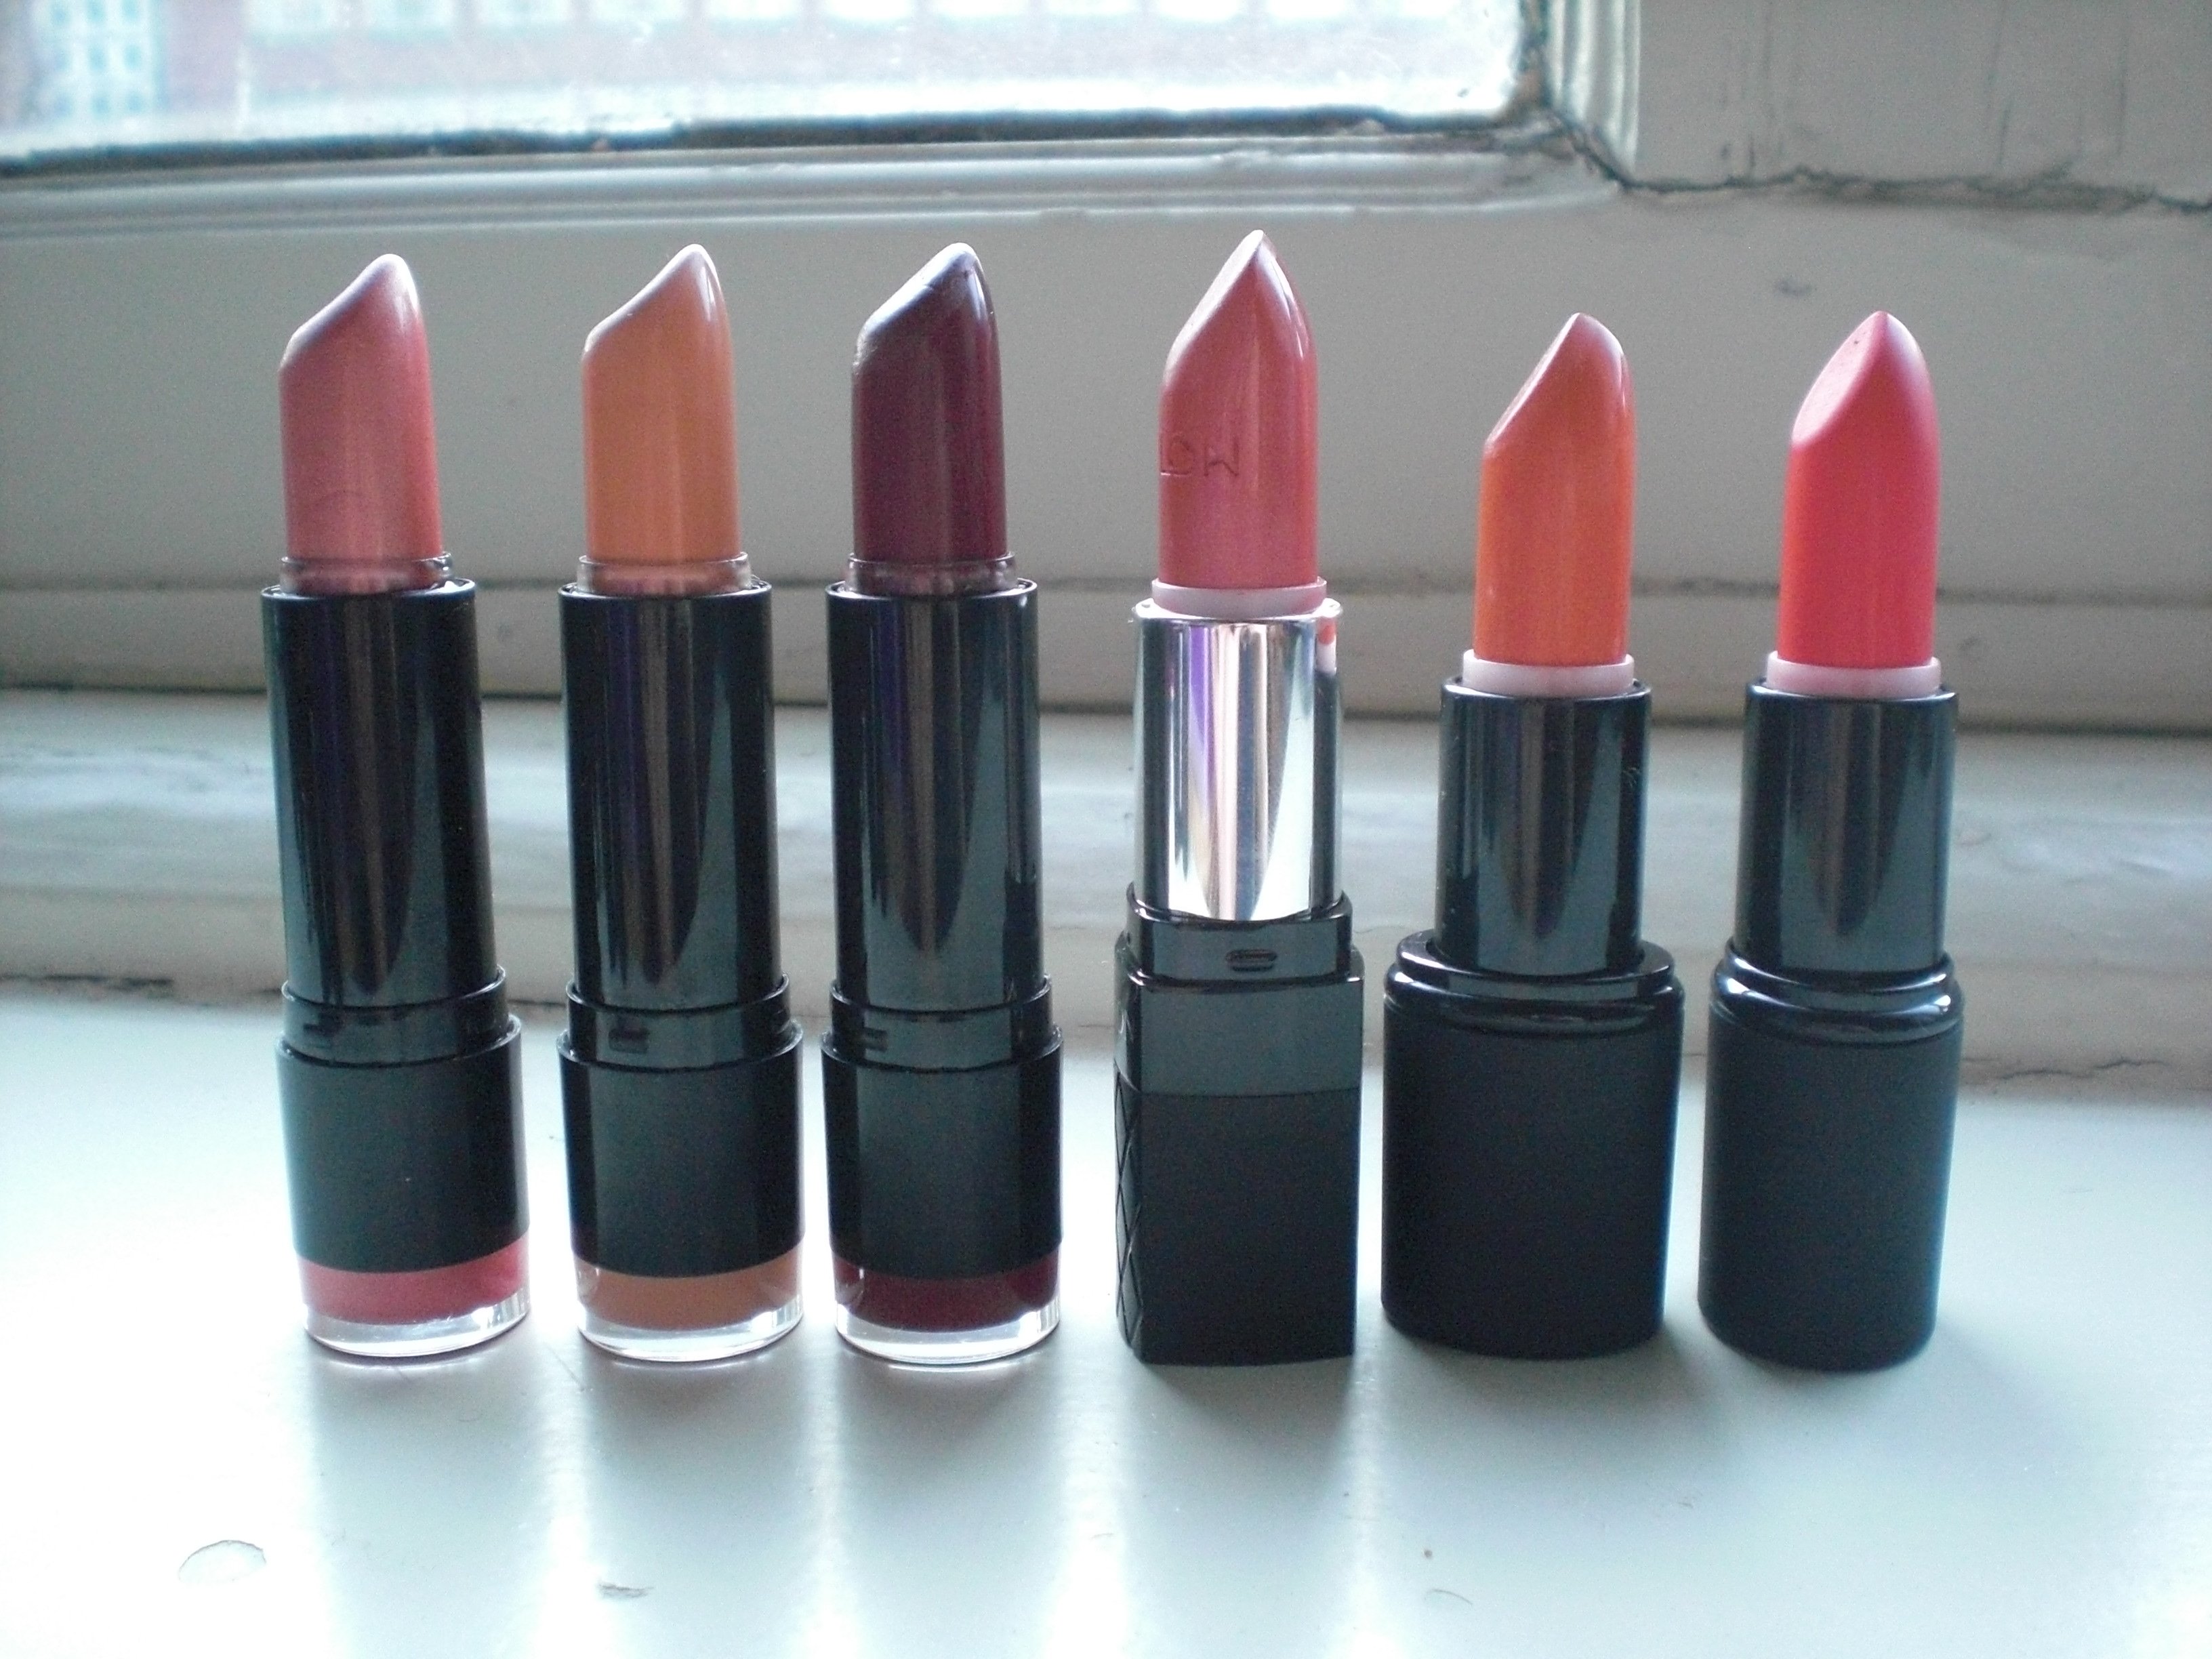 lipsticks 1 - Lipstick Alert!